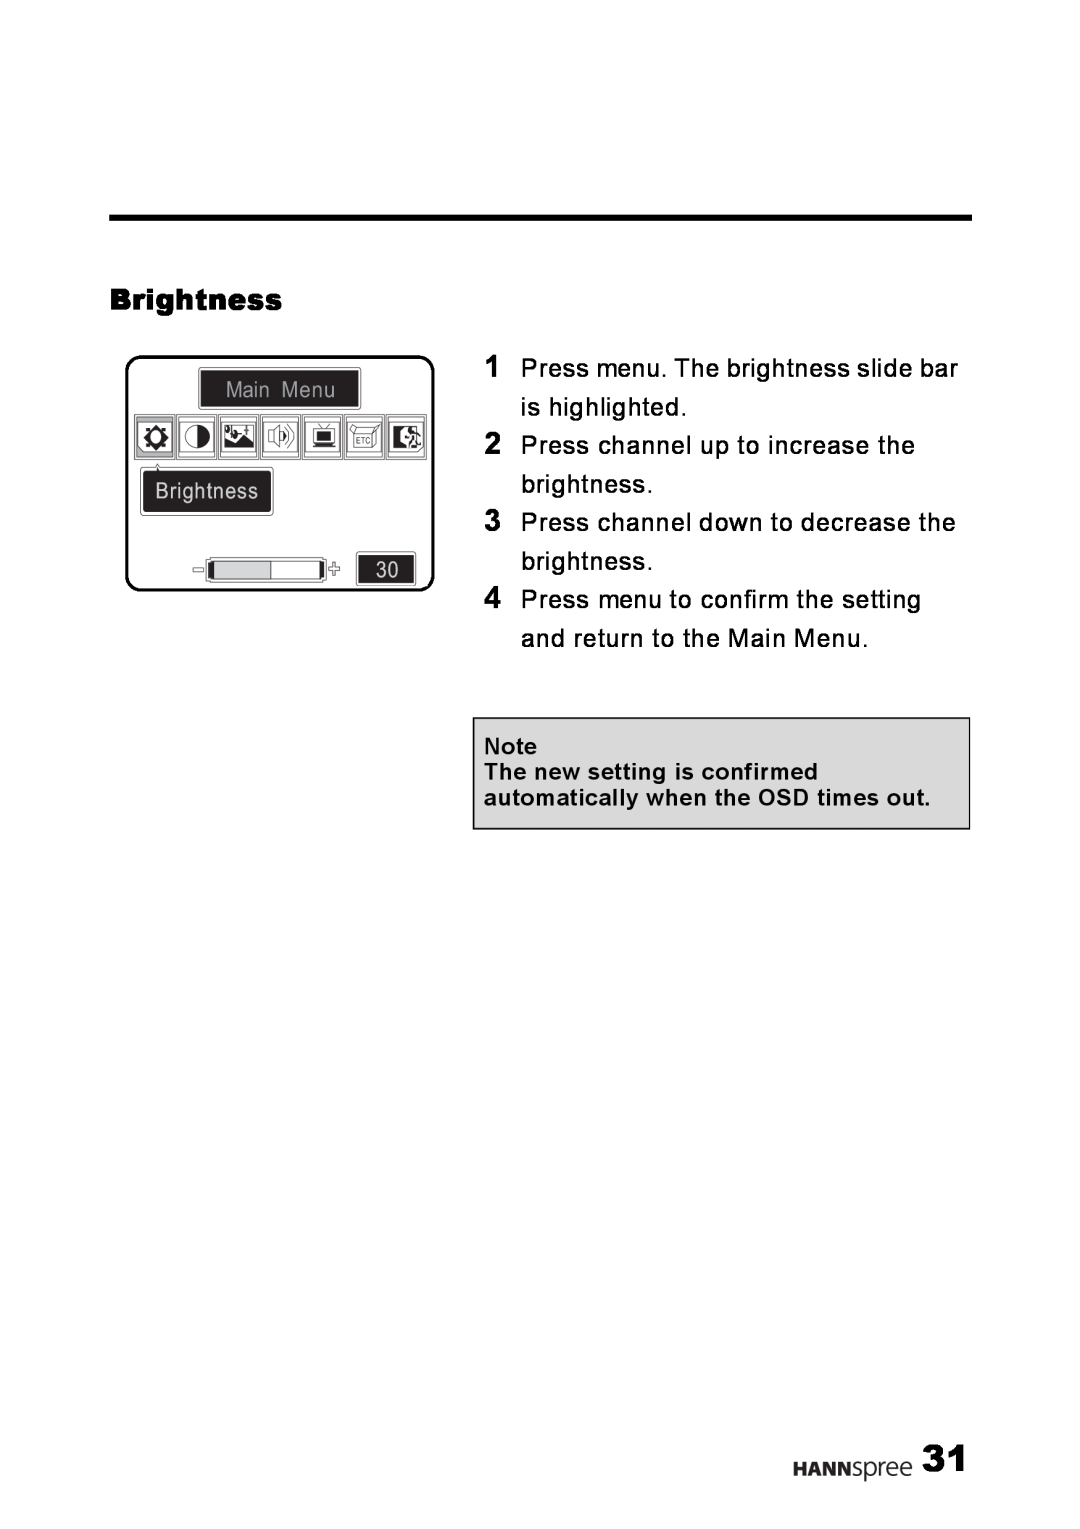 HANNspree LT02-12U1-000 user manual Brightness, Press menu. The brightness slide bar is highlighted, Main Menu 